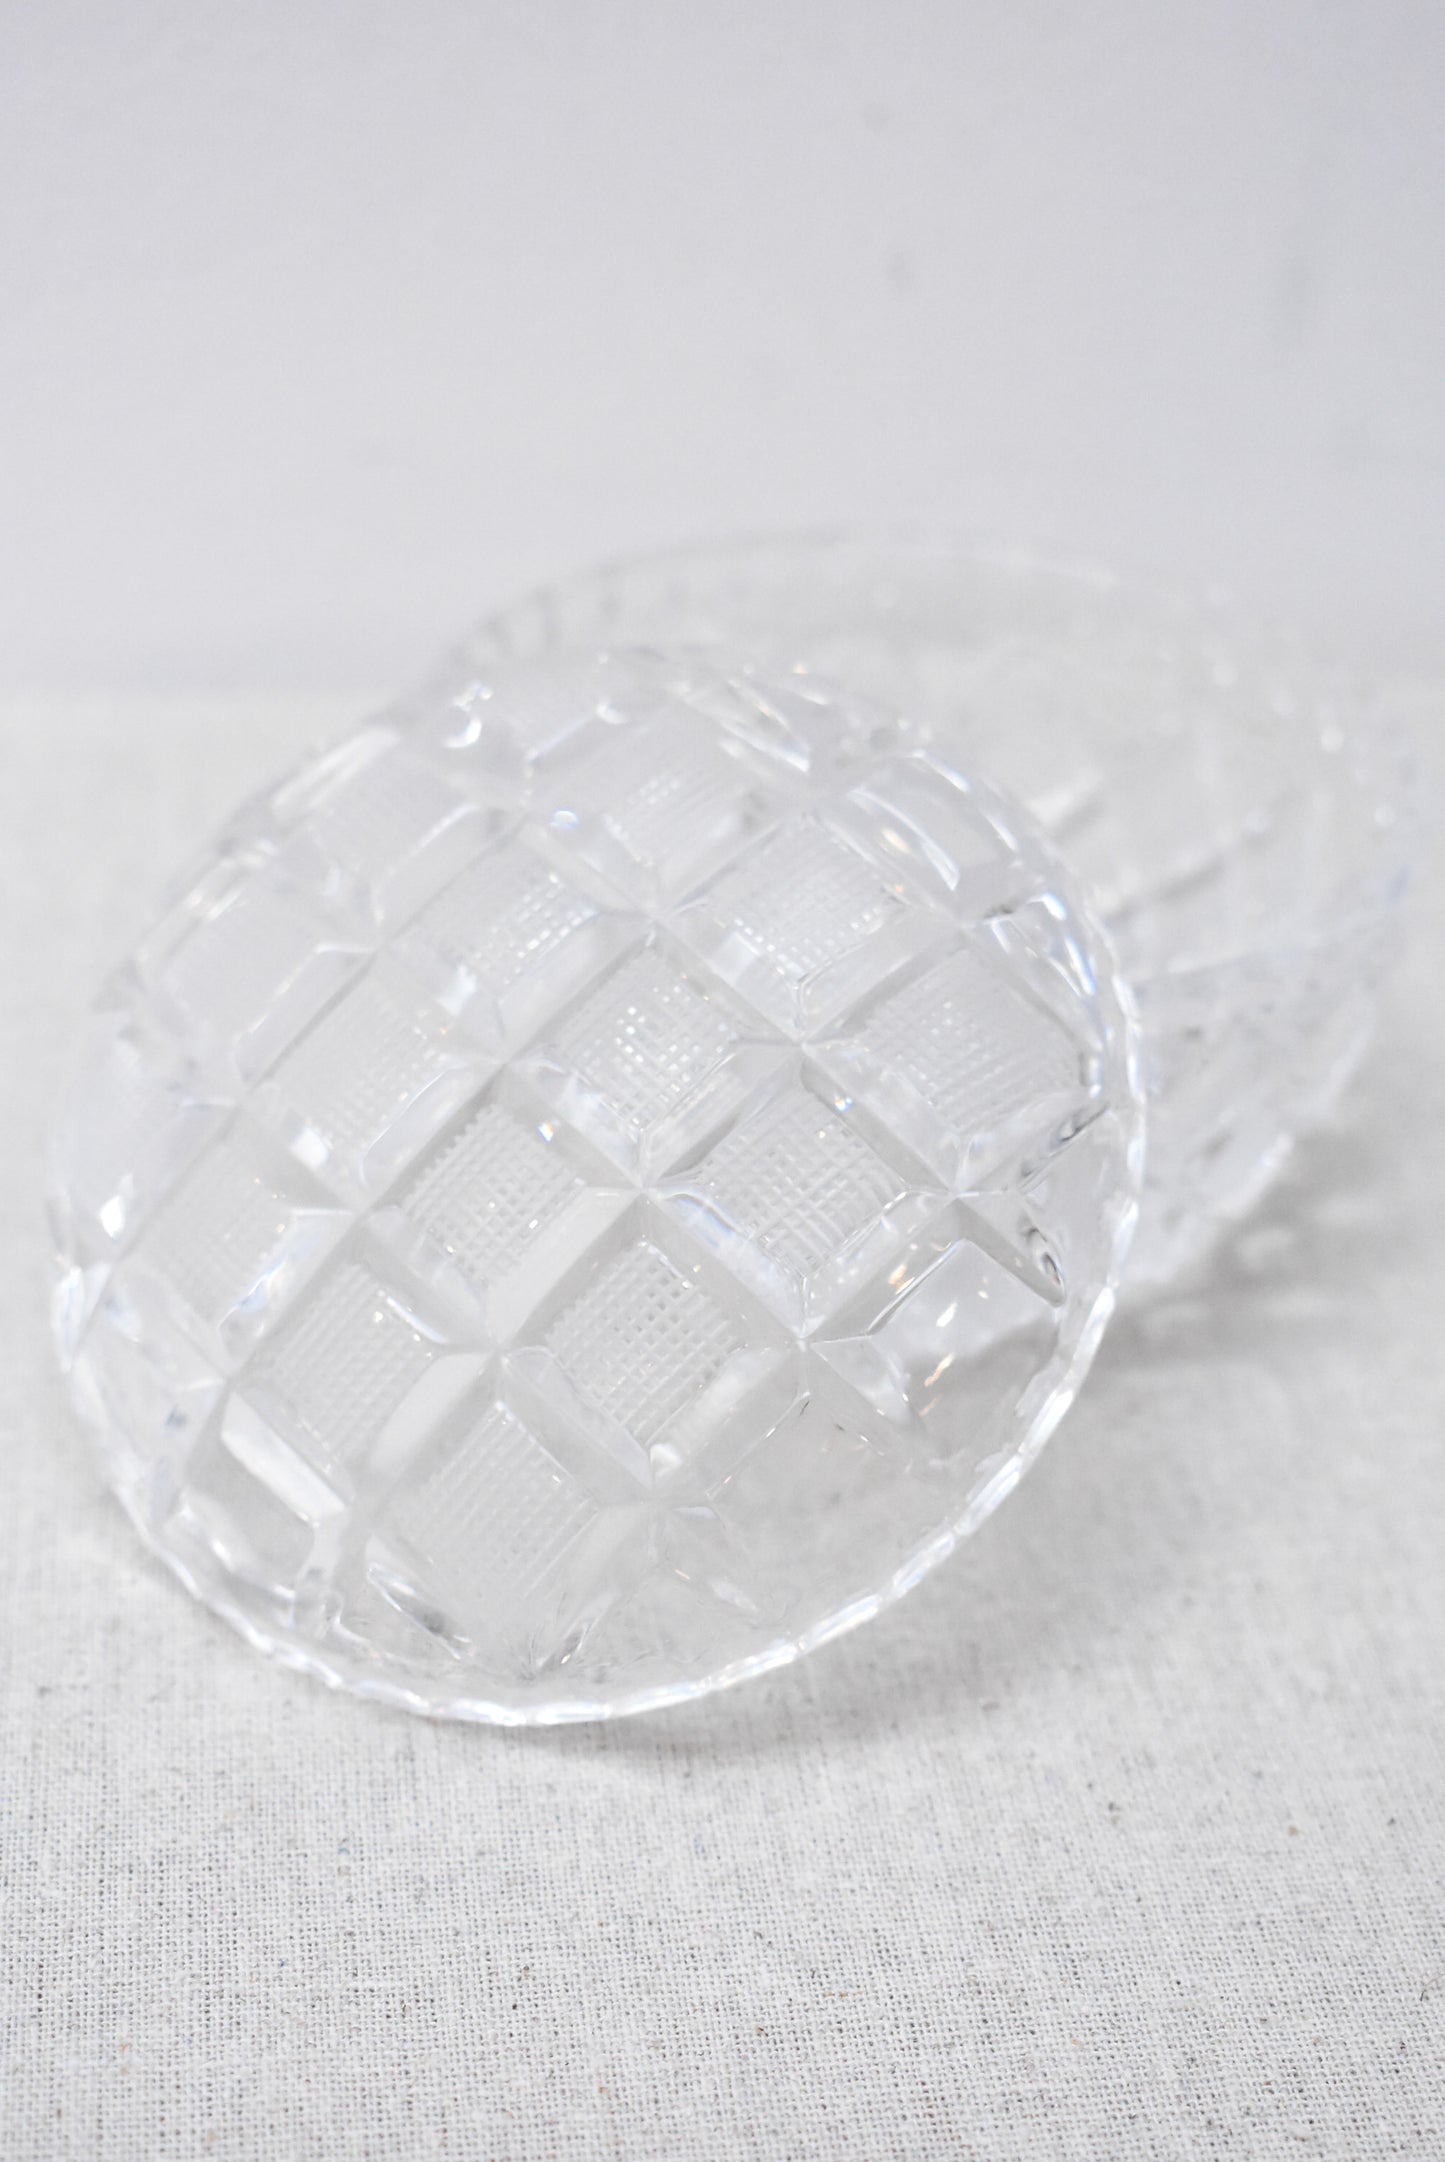 Lidded crystal bowl